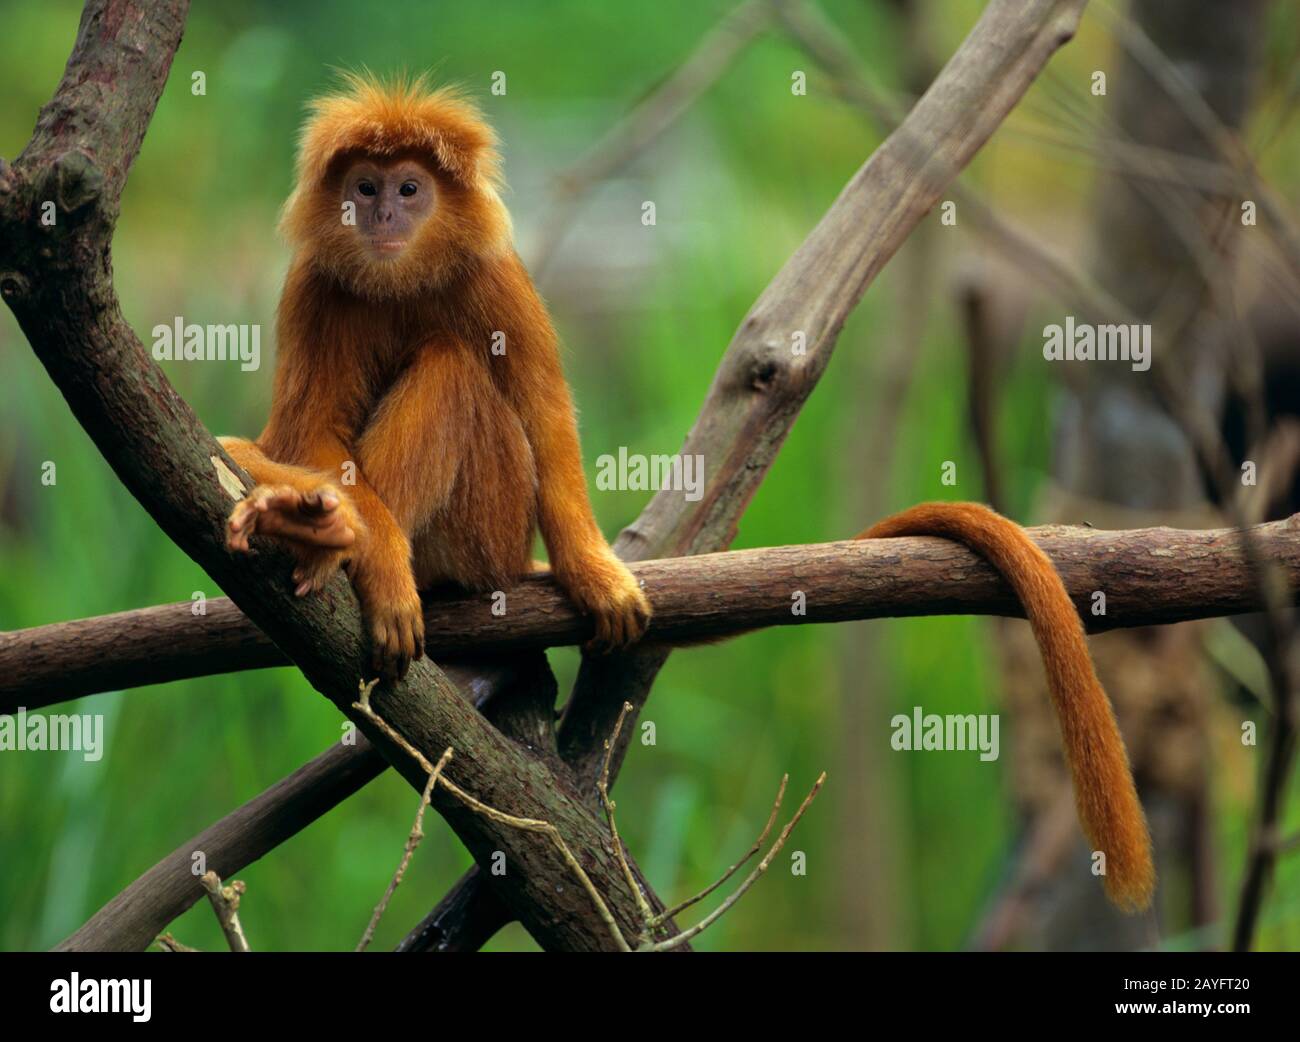 Scimmia a foglia dusky, langur spettacolare (Presbytis melalophos), seduto su un ramo, vista frontale Foto Stock